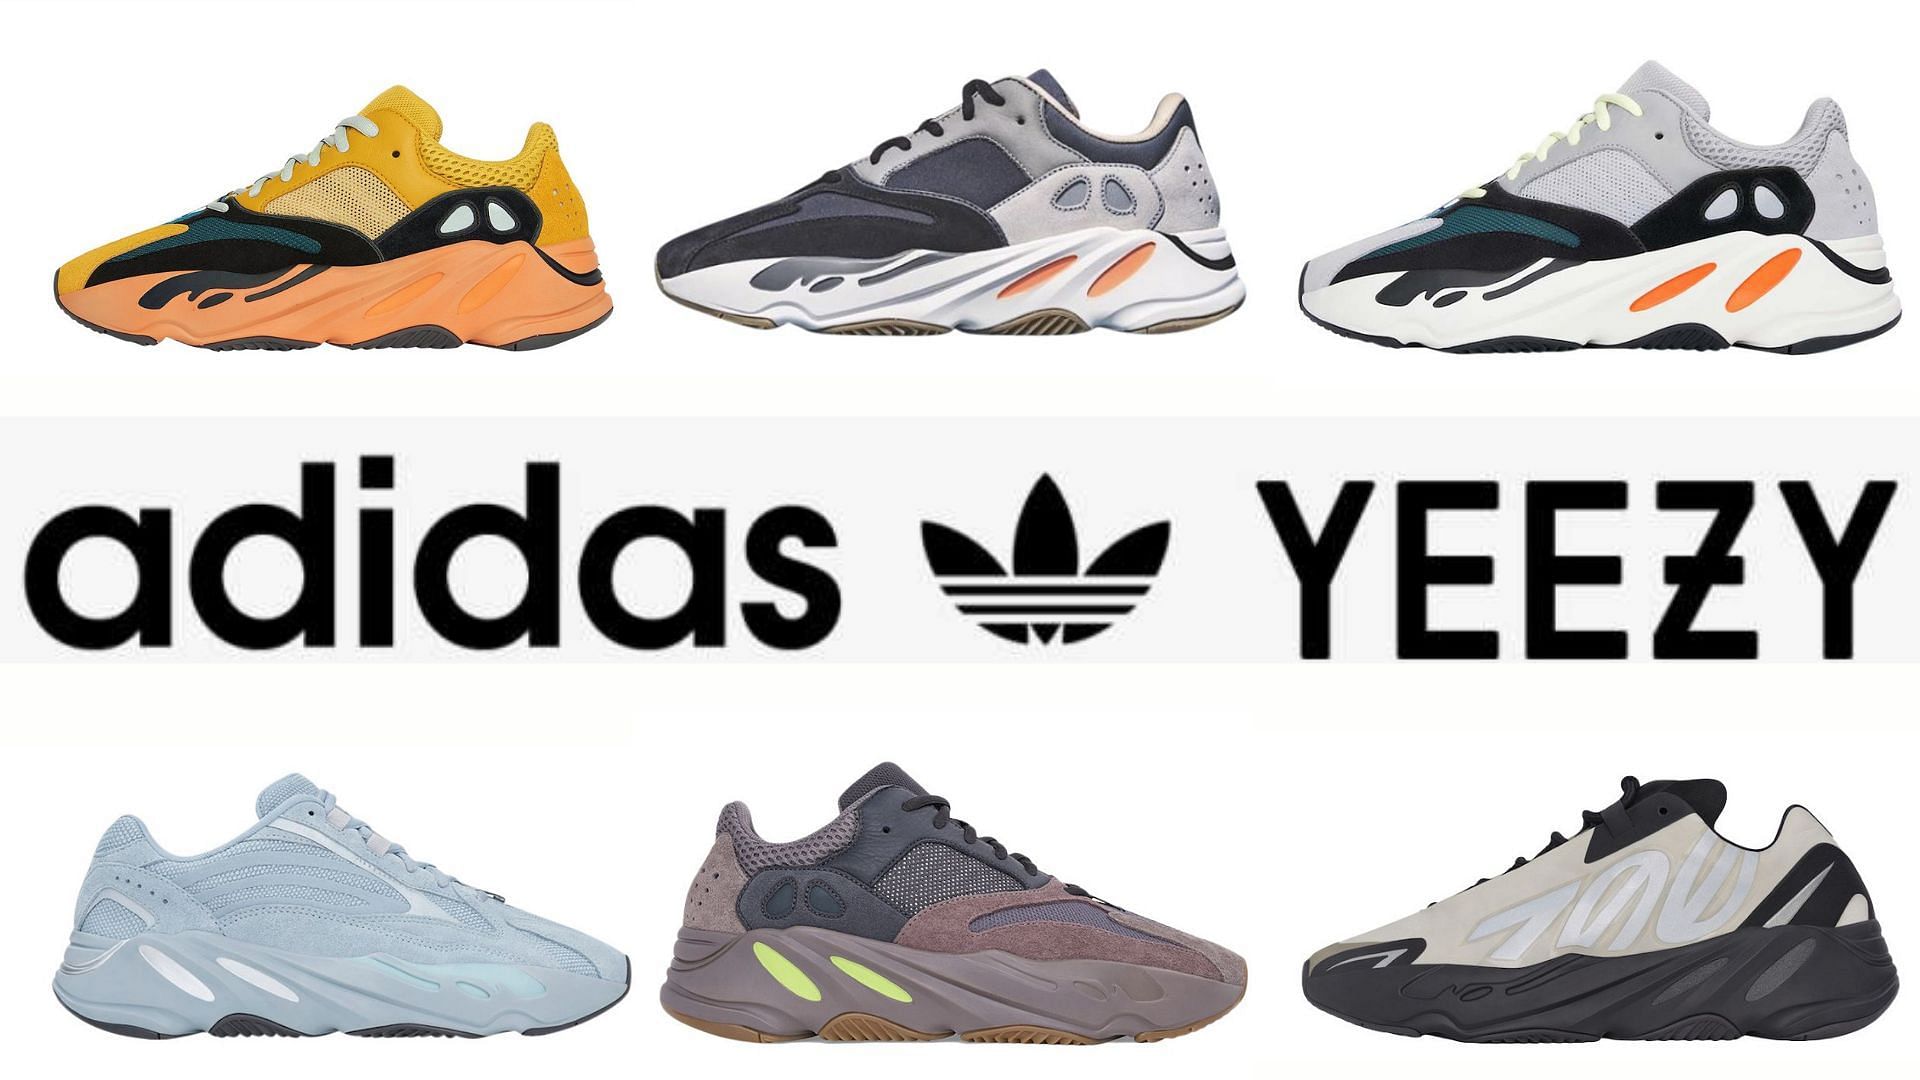 Adidas Yeezy BOOST 700 colorways so far (Image via Sportskeeda)